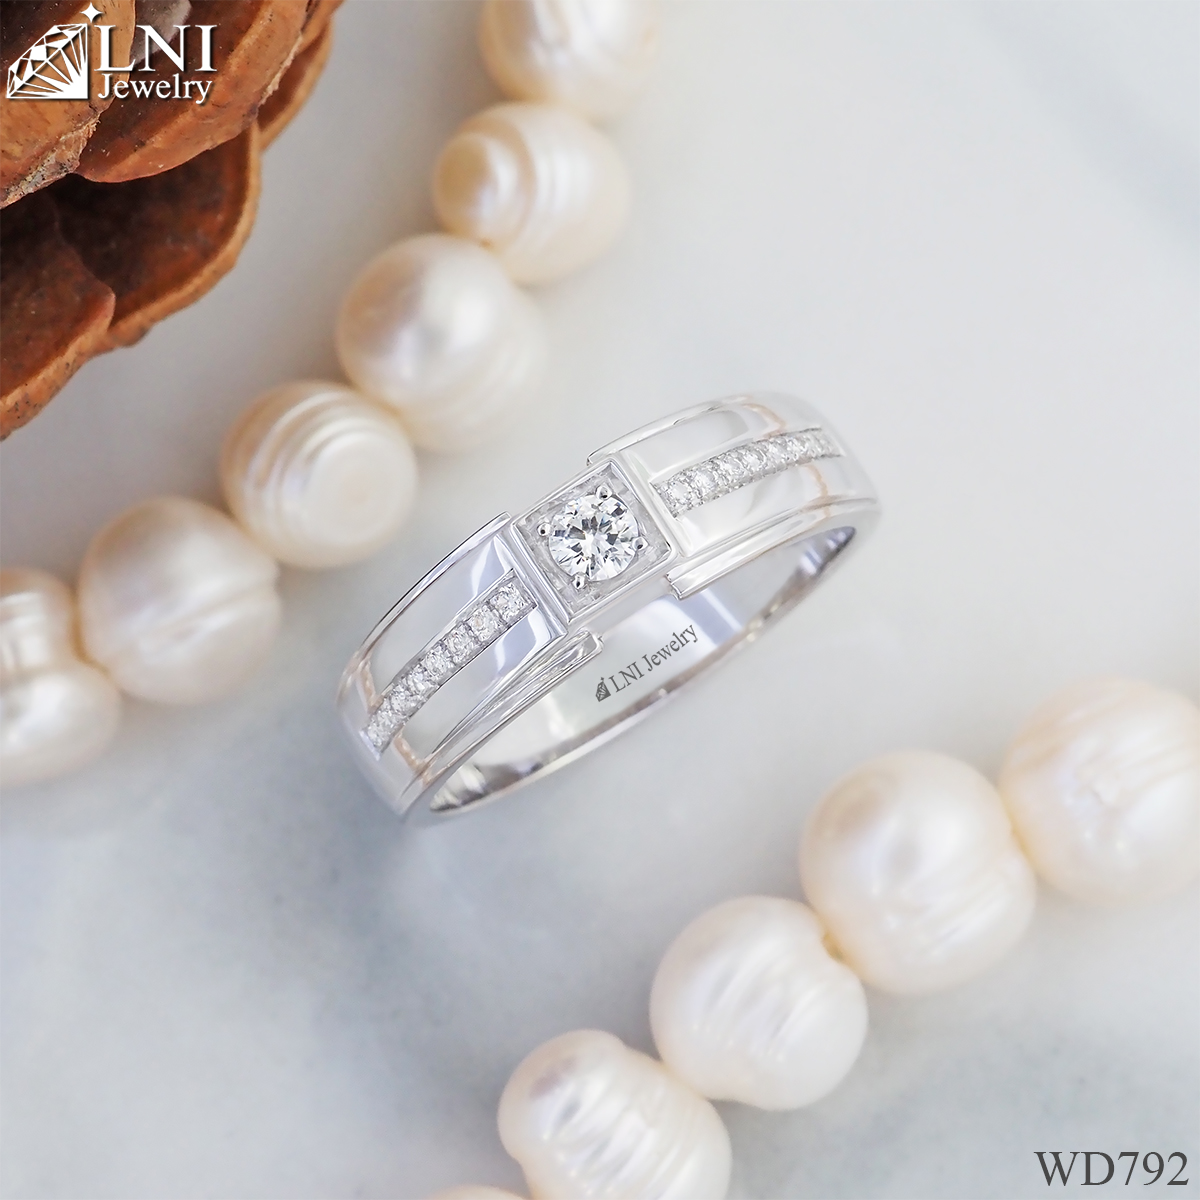 WD792 Diamond Ring